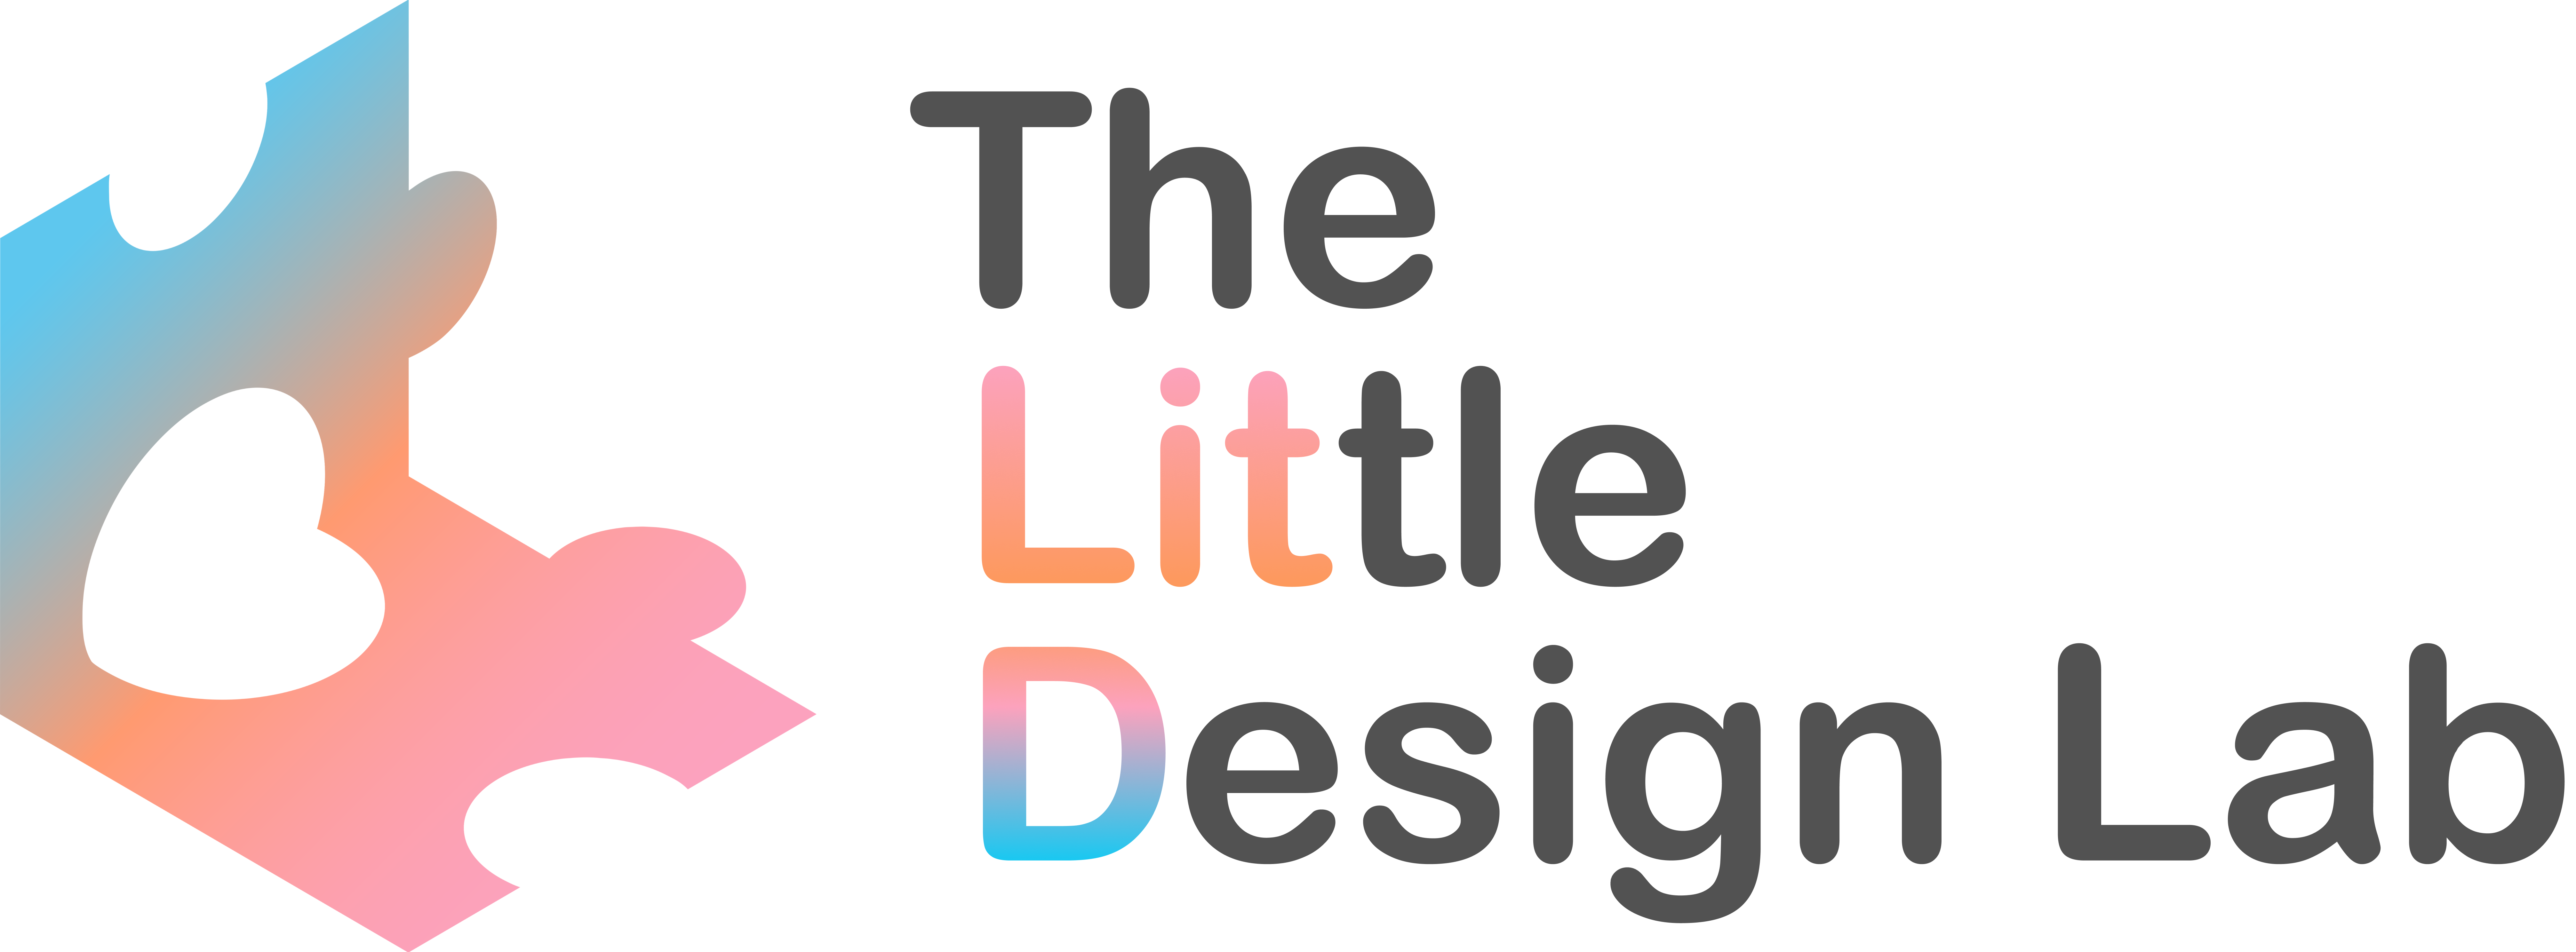 The Little Design Lab